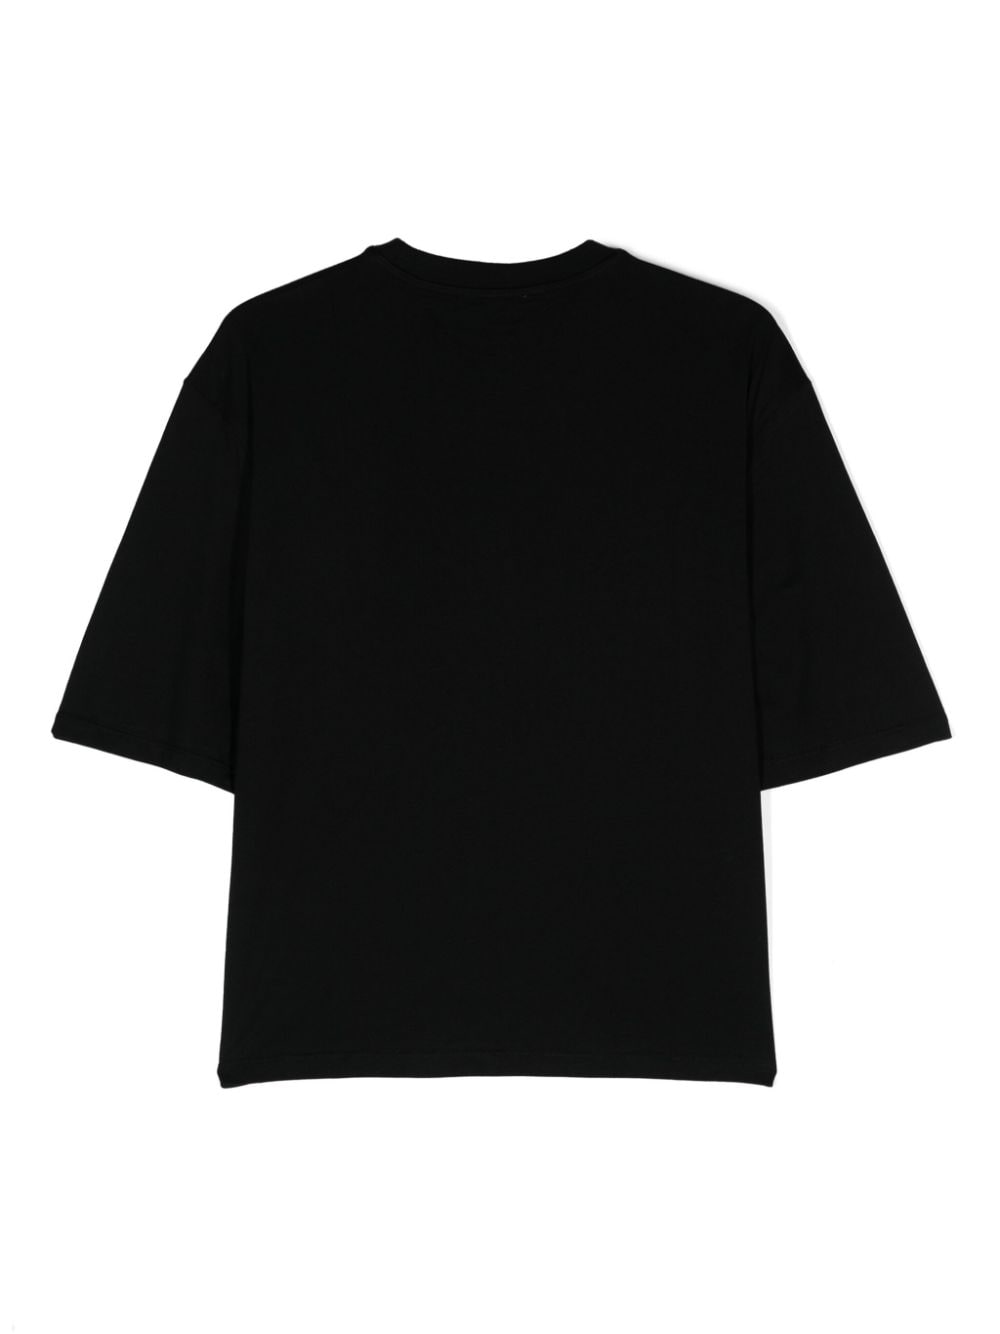 Black cotton t-shirt for girls